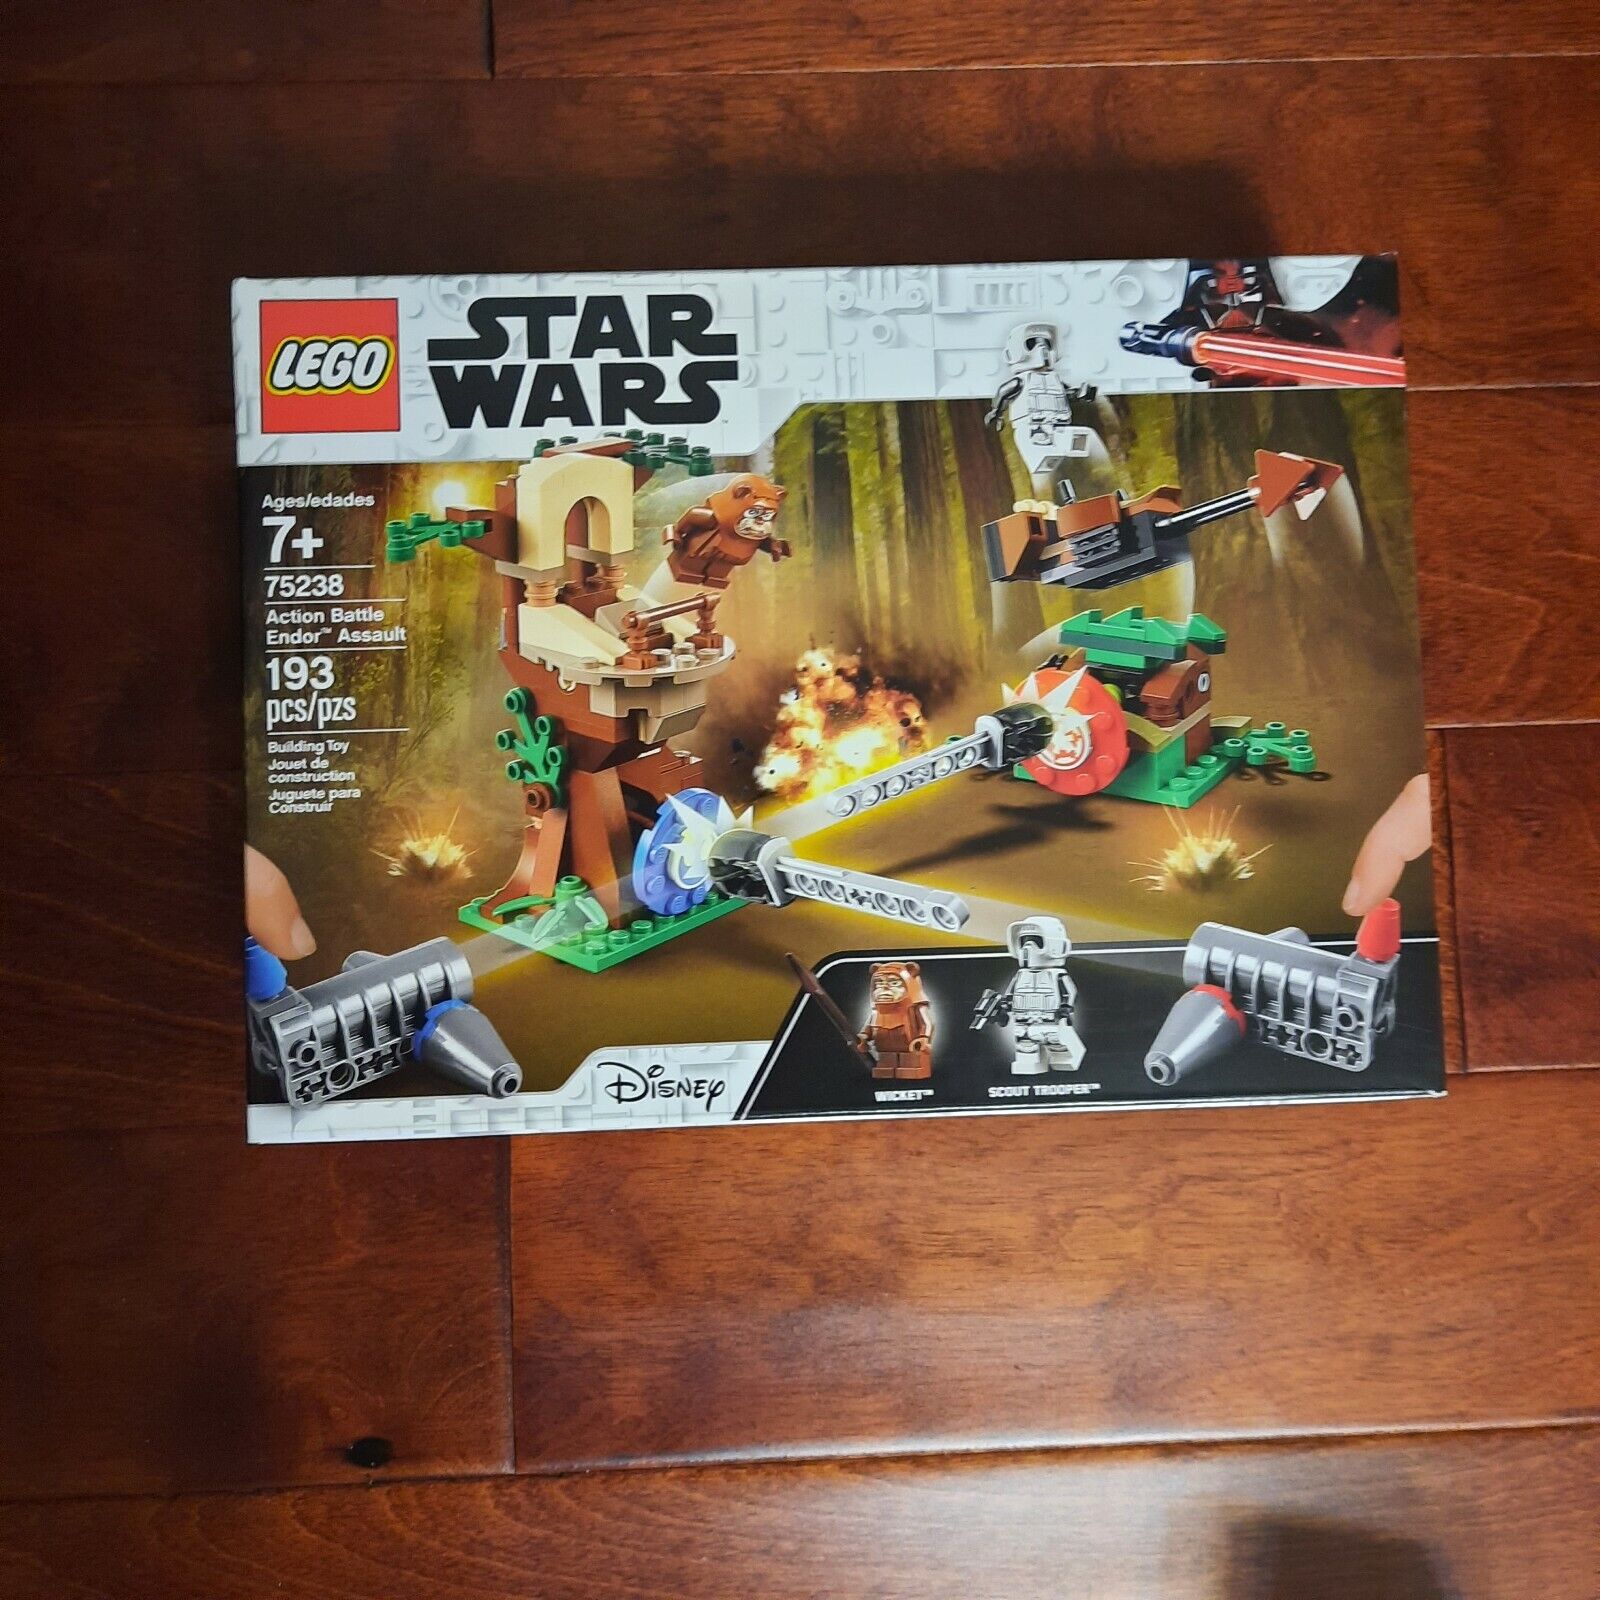 LEGO Star Wars 75238 Action Battle Endor Assault 193 Pcs Ewoks Brand New in Box!